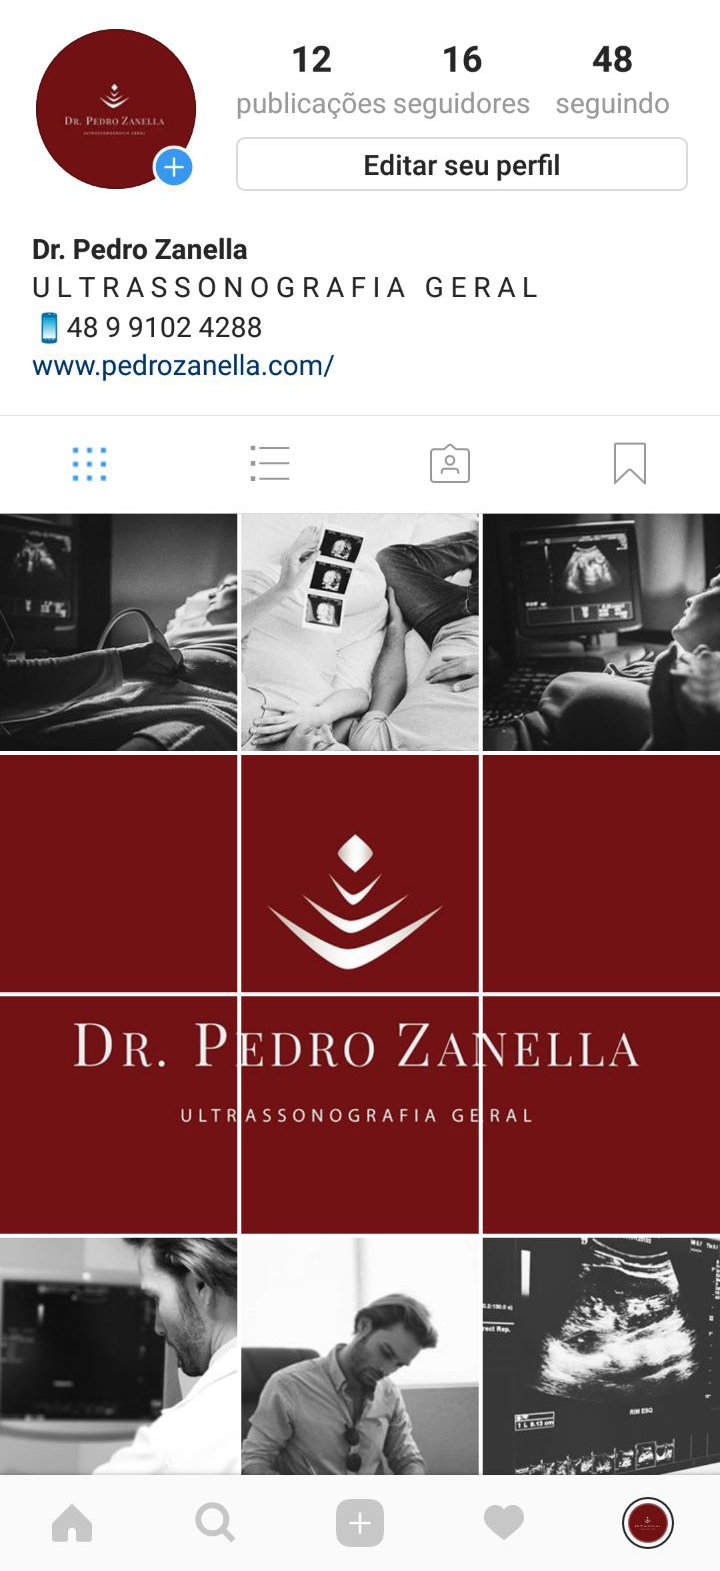 Pedro Zanella doctor doutor medico